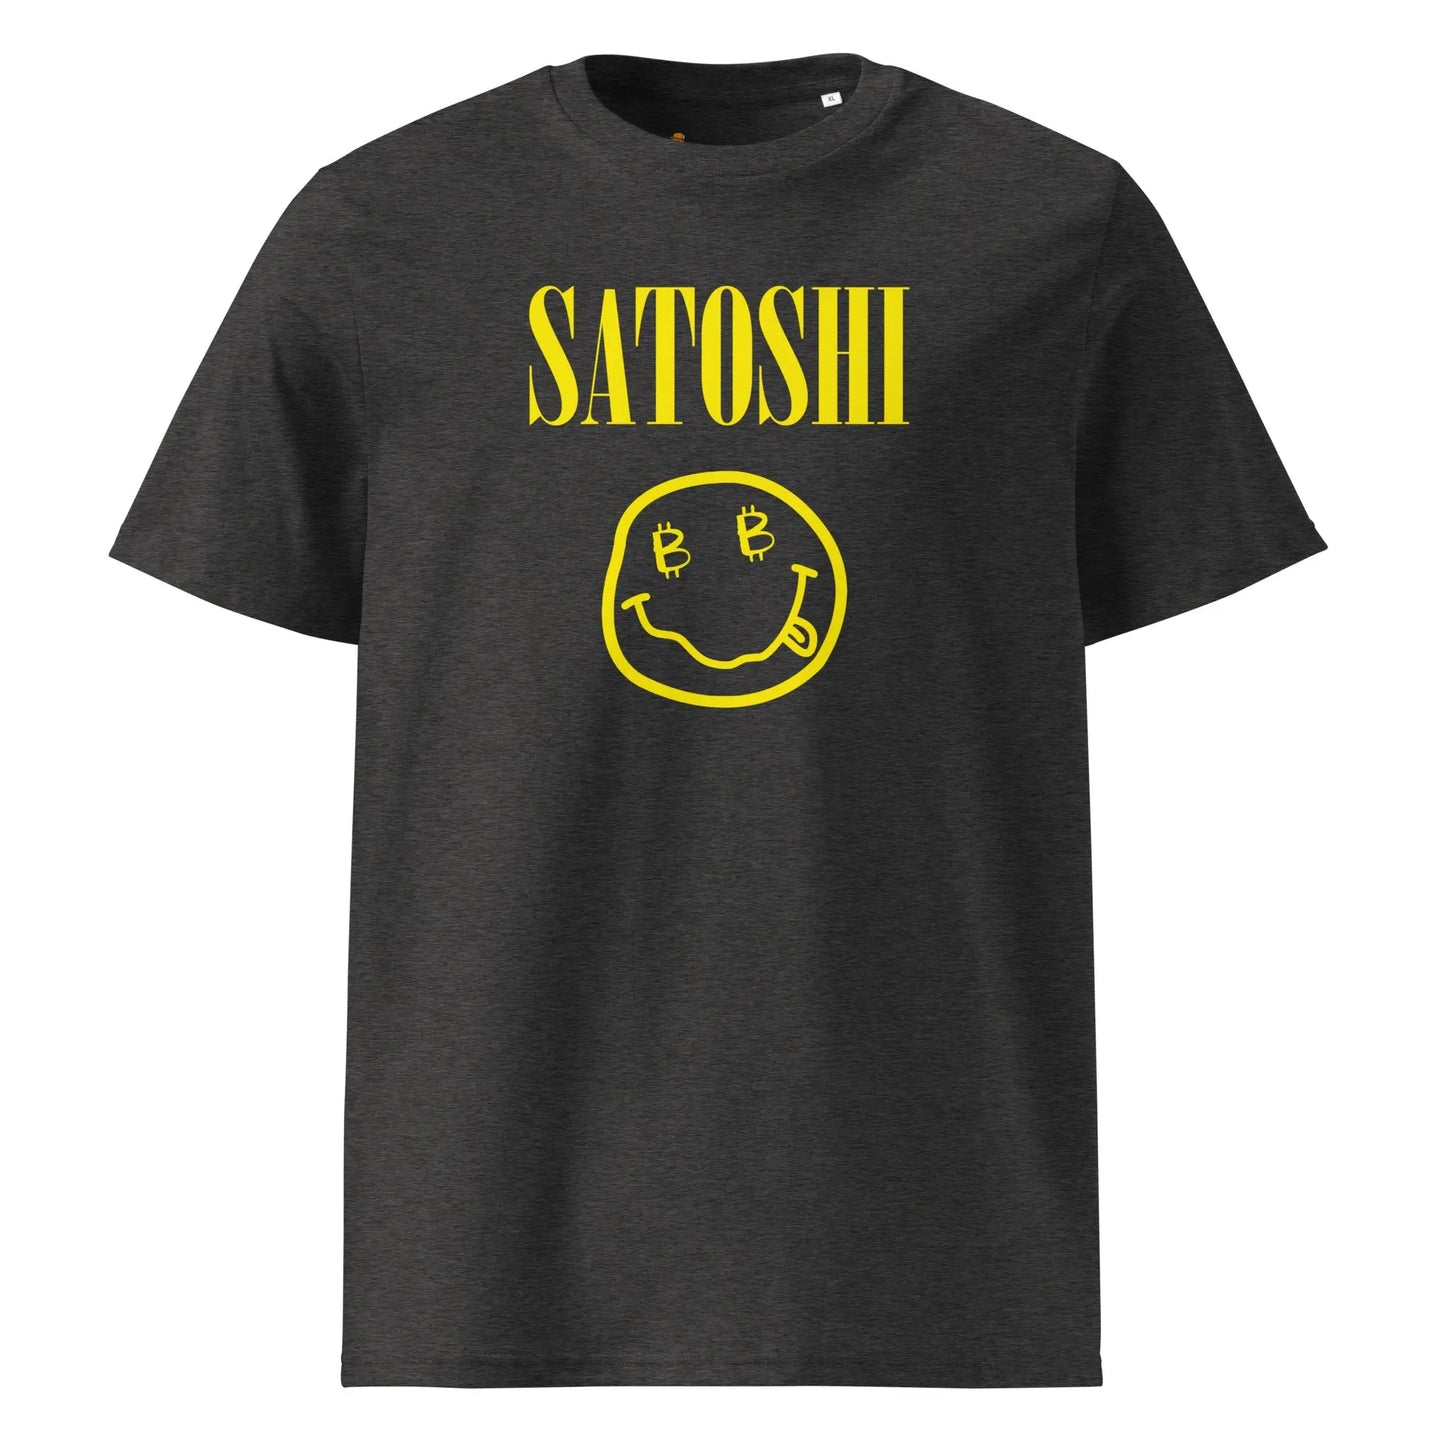 Satoshi - Jack Dorsey Edition - Premium Unisex Organic Cotton Bitcoin T-shirt Store of Value